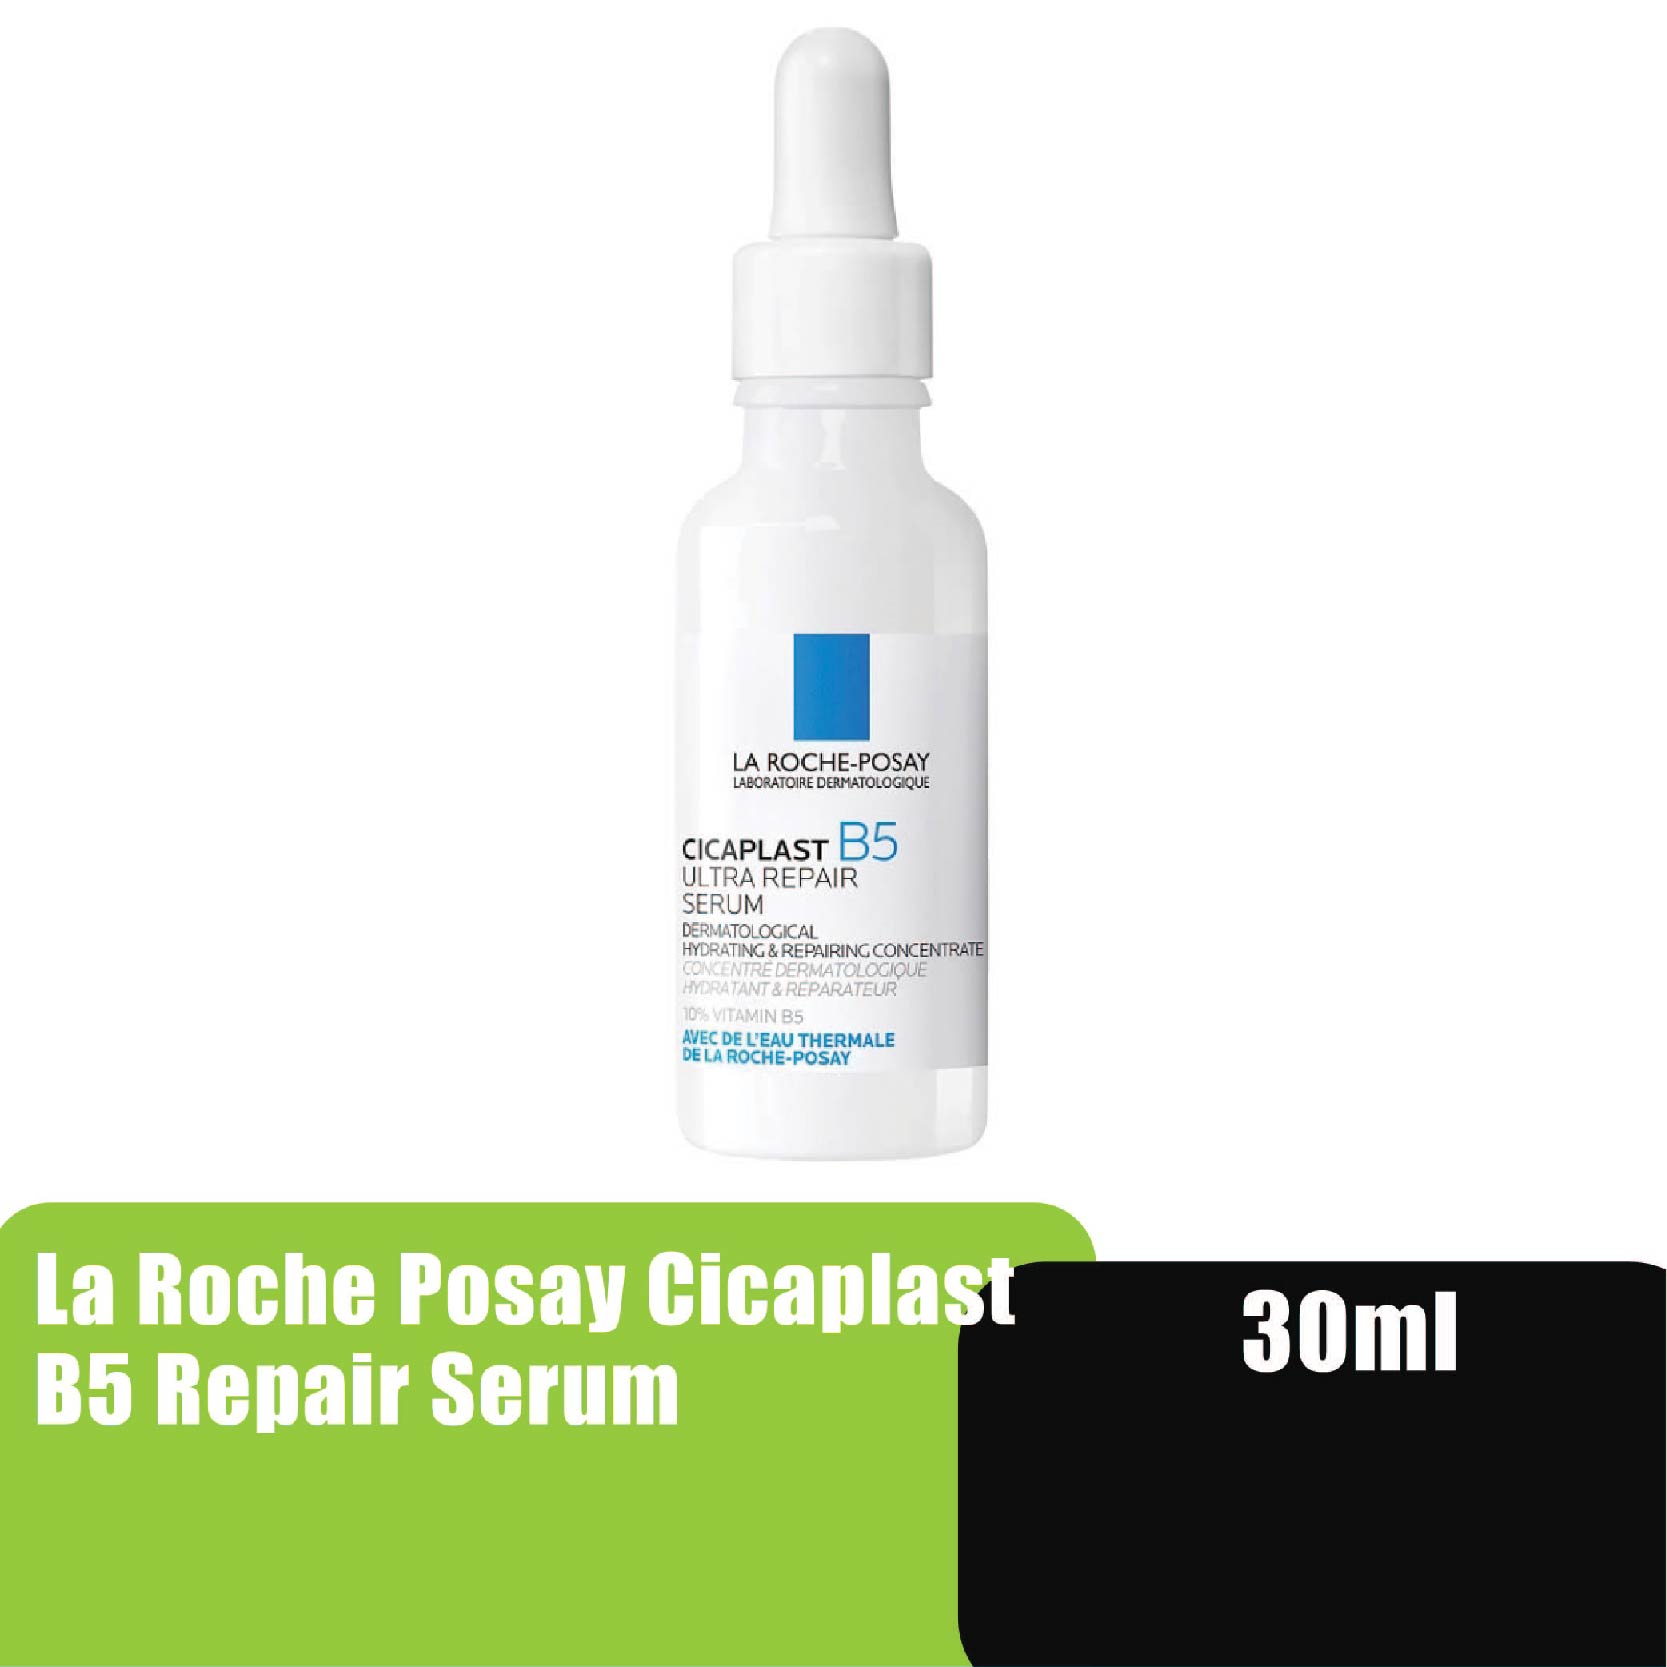 LA ROCHE POSAY Cicaplast B5 Ultra Repair Serum 30ml - Face Serum / Serum Muka For Sensitive & Dry Skin 精华液